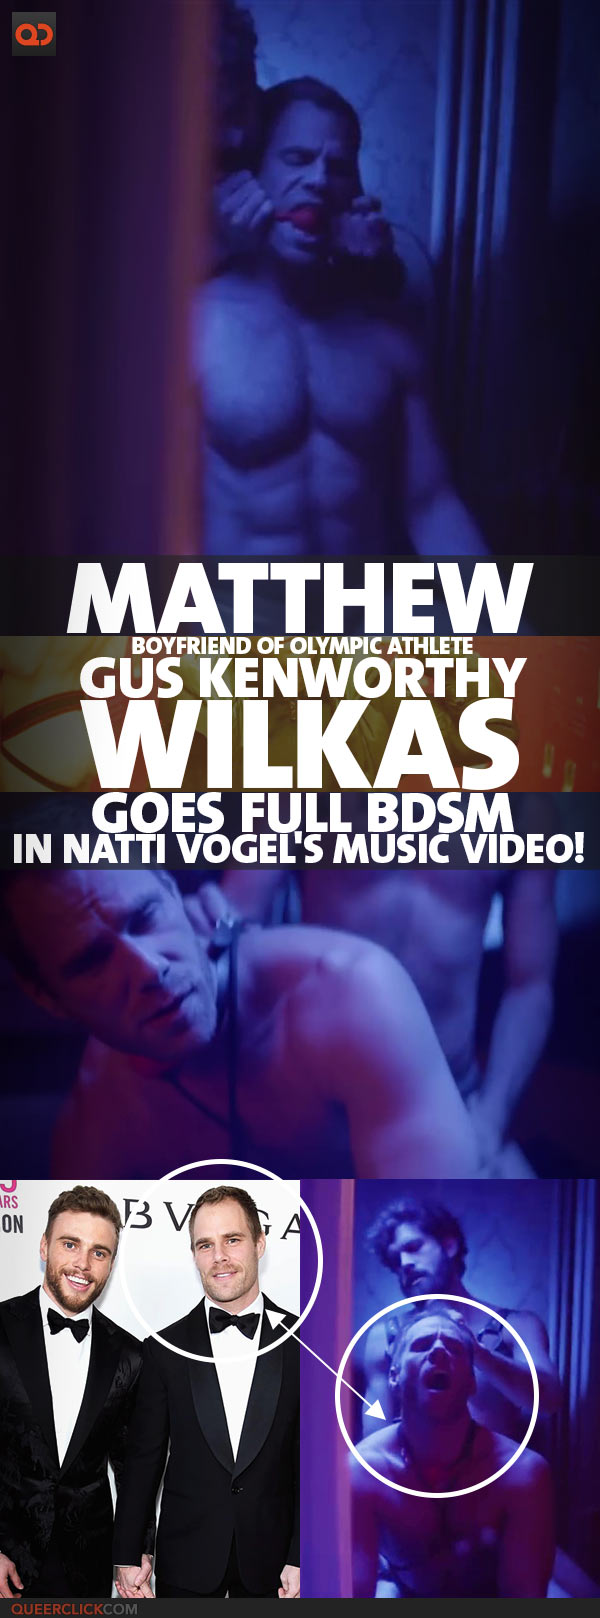 Matthew Wilkas, Boyfriend Of Olympic Athlete Gus Kenworthy, Goes Full BDSM In Natti Vogel's Music Video!